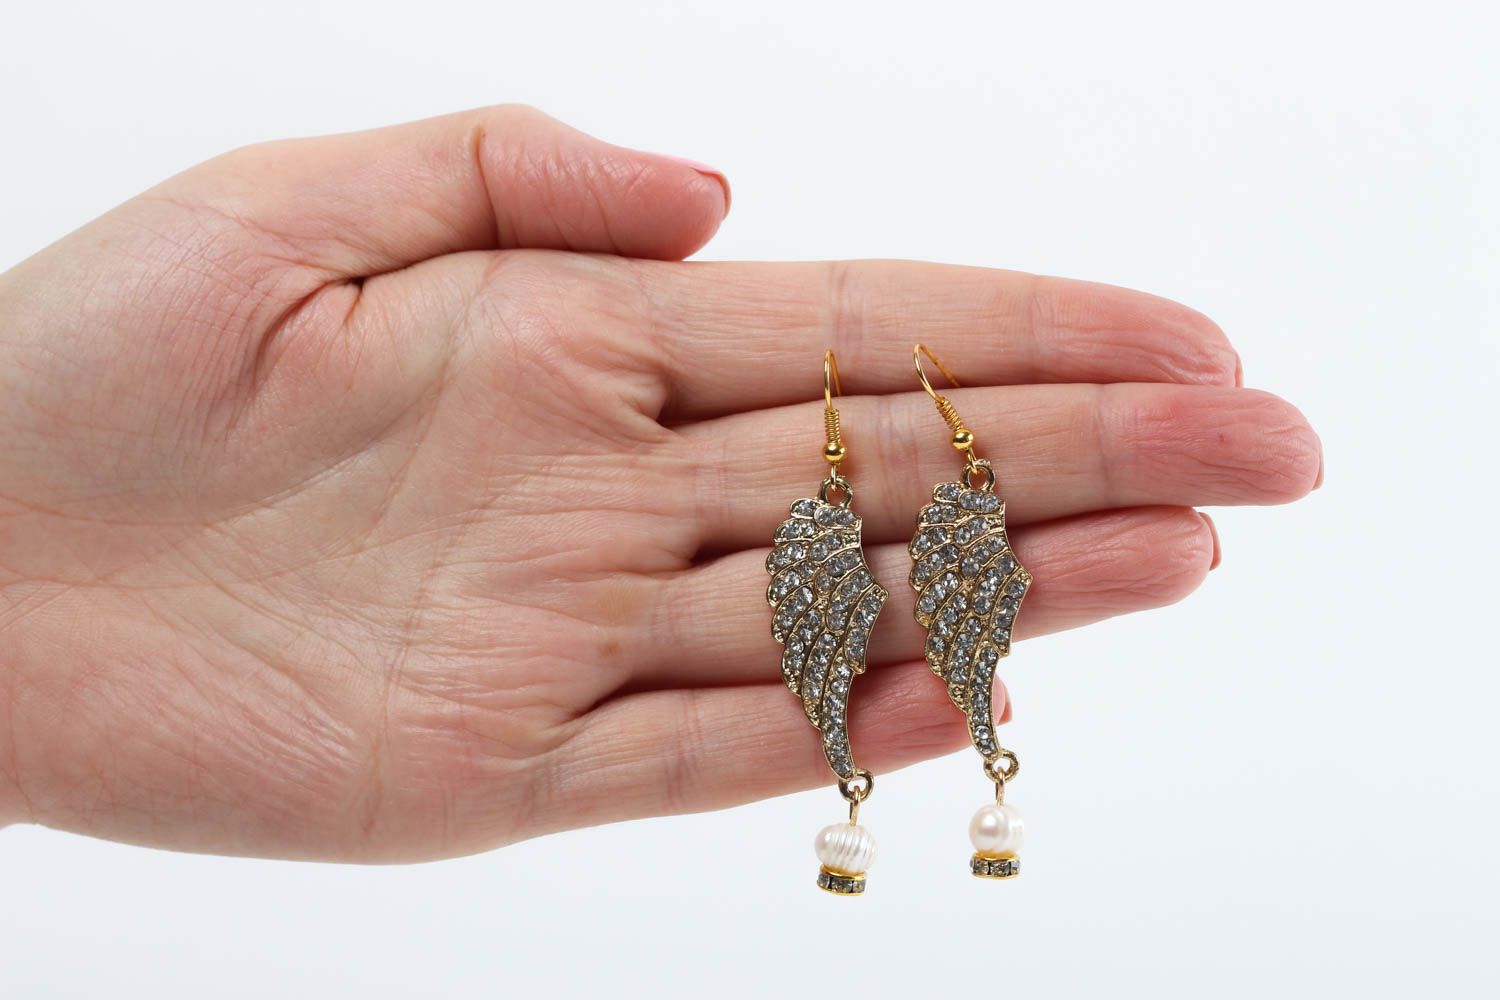 Handmade earrings designer earrings unusual gift elite jewelry gift ideas photo 5